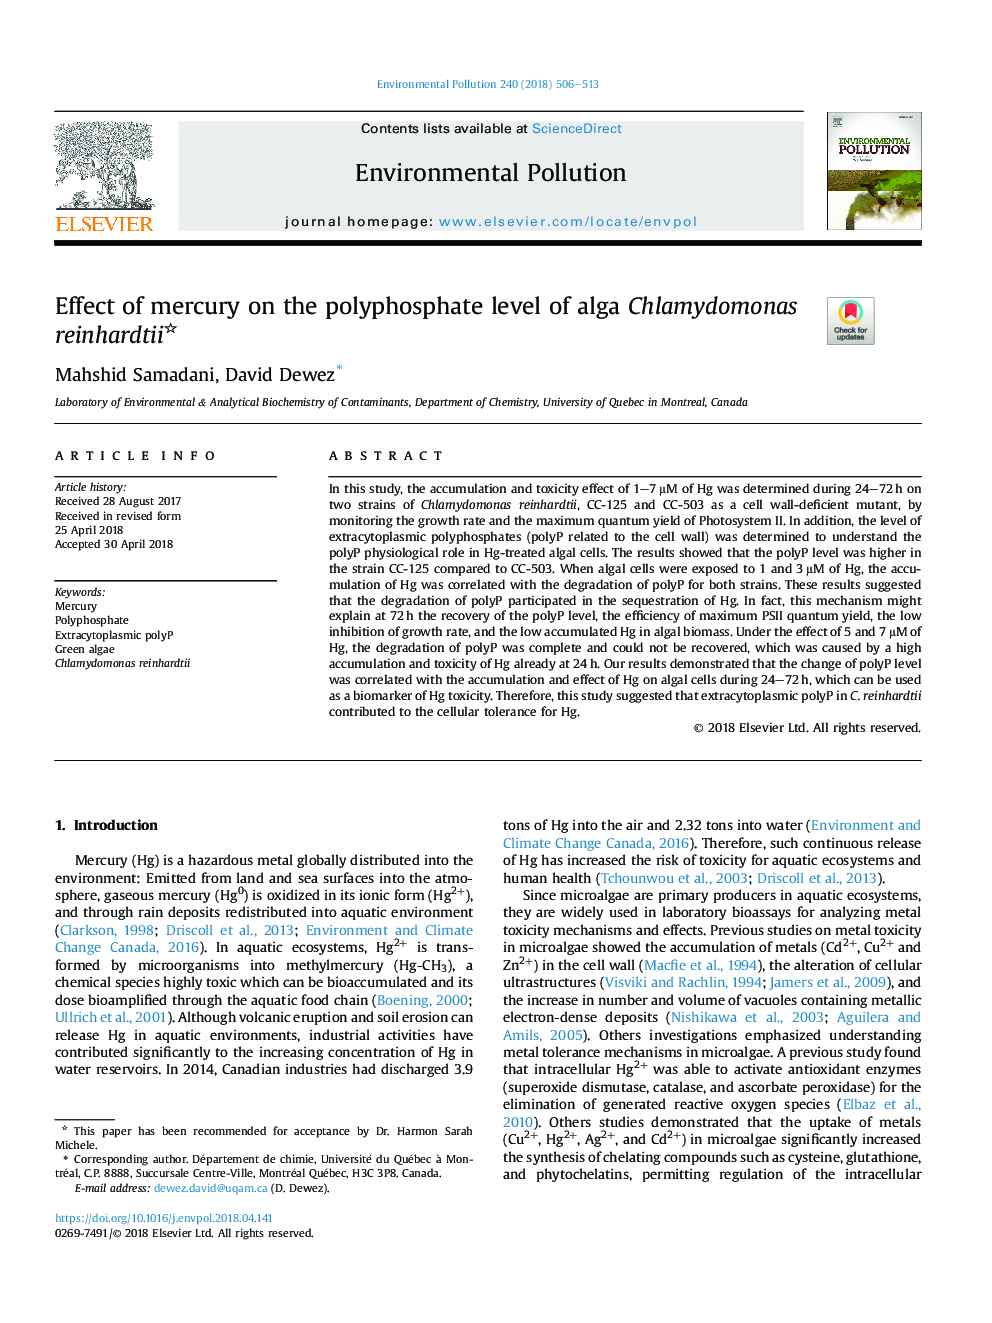 Effect of mercury on the polyphosphate level of alga Chlamydomonas reinhardtii